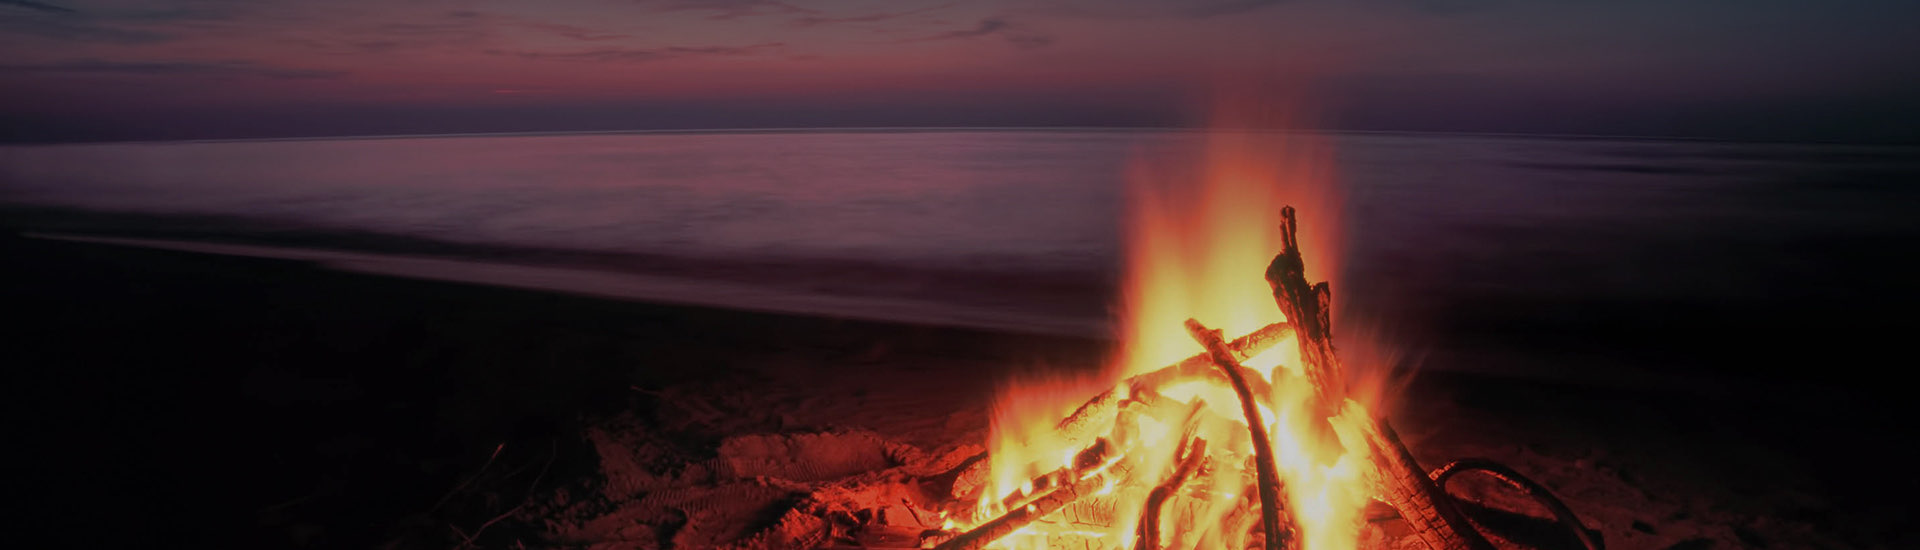 bonfire on the lakeshore at sunset